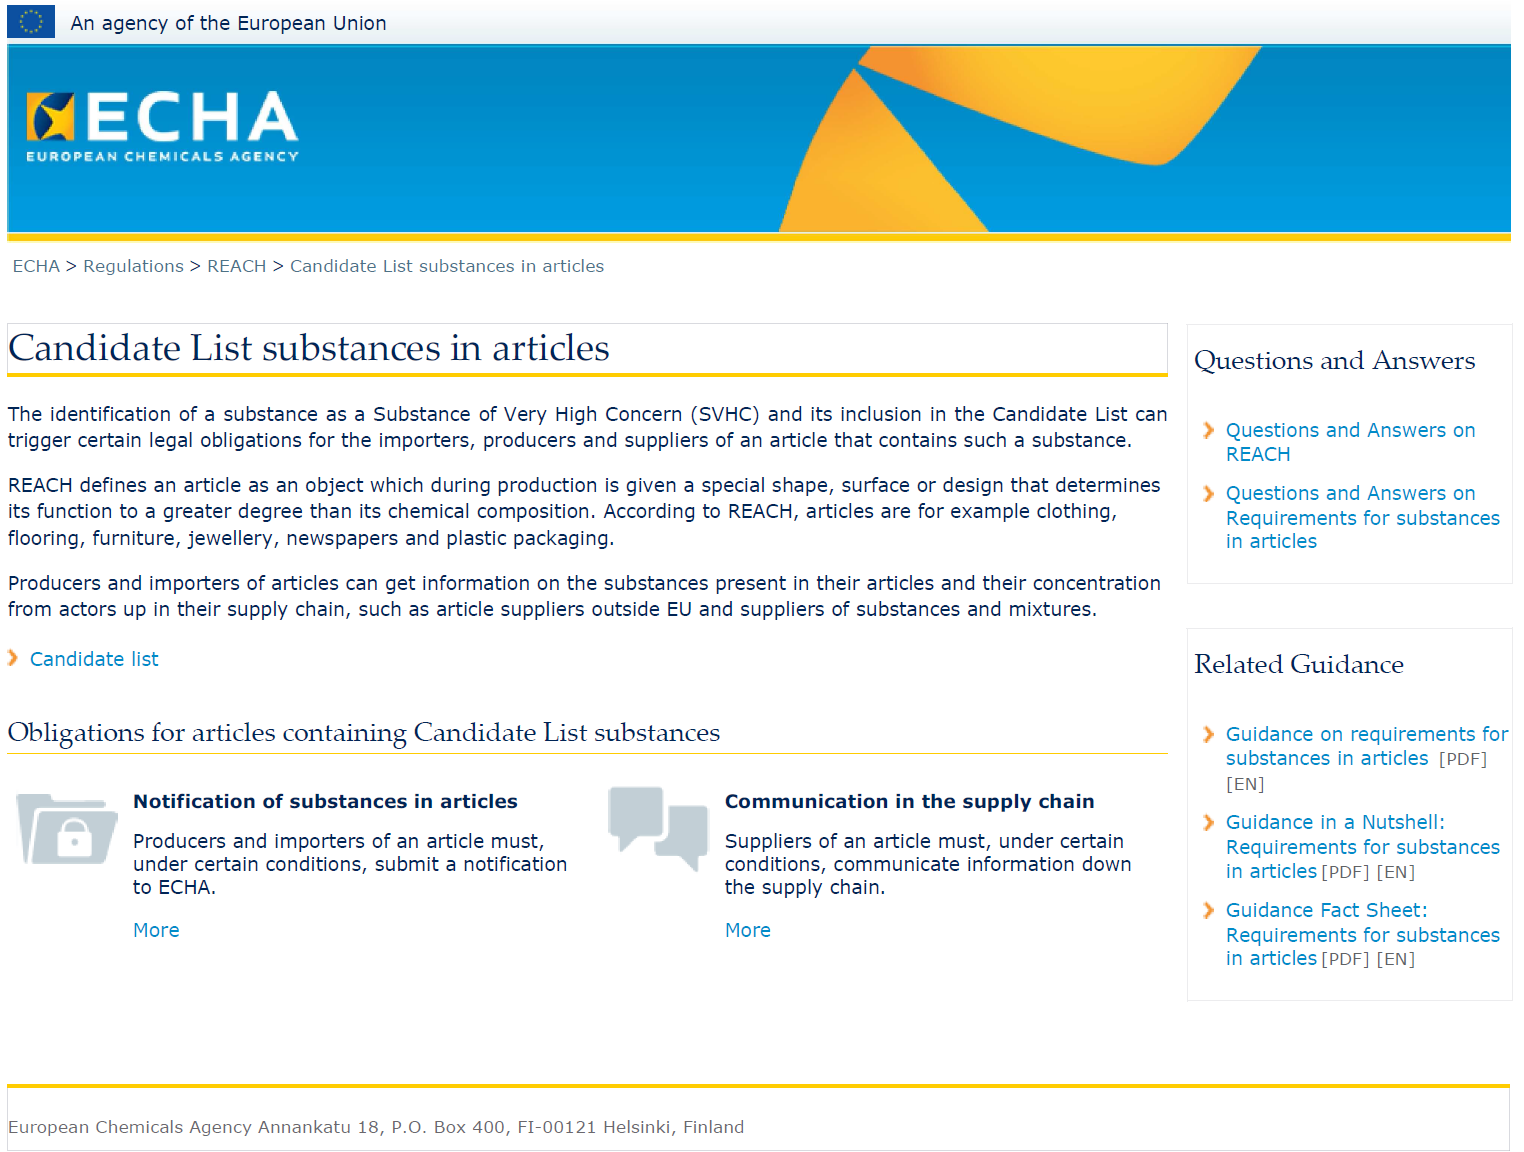 Substances in Articles website http://echa.europa.